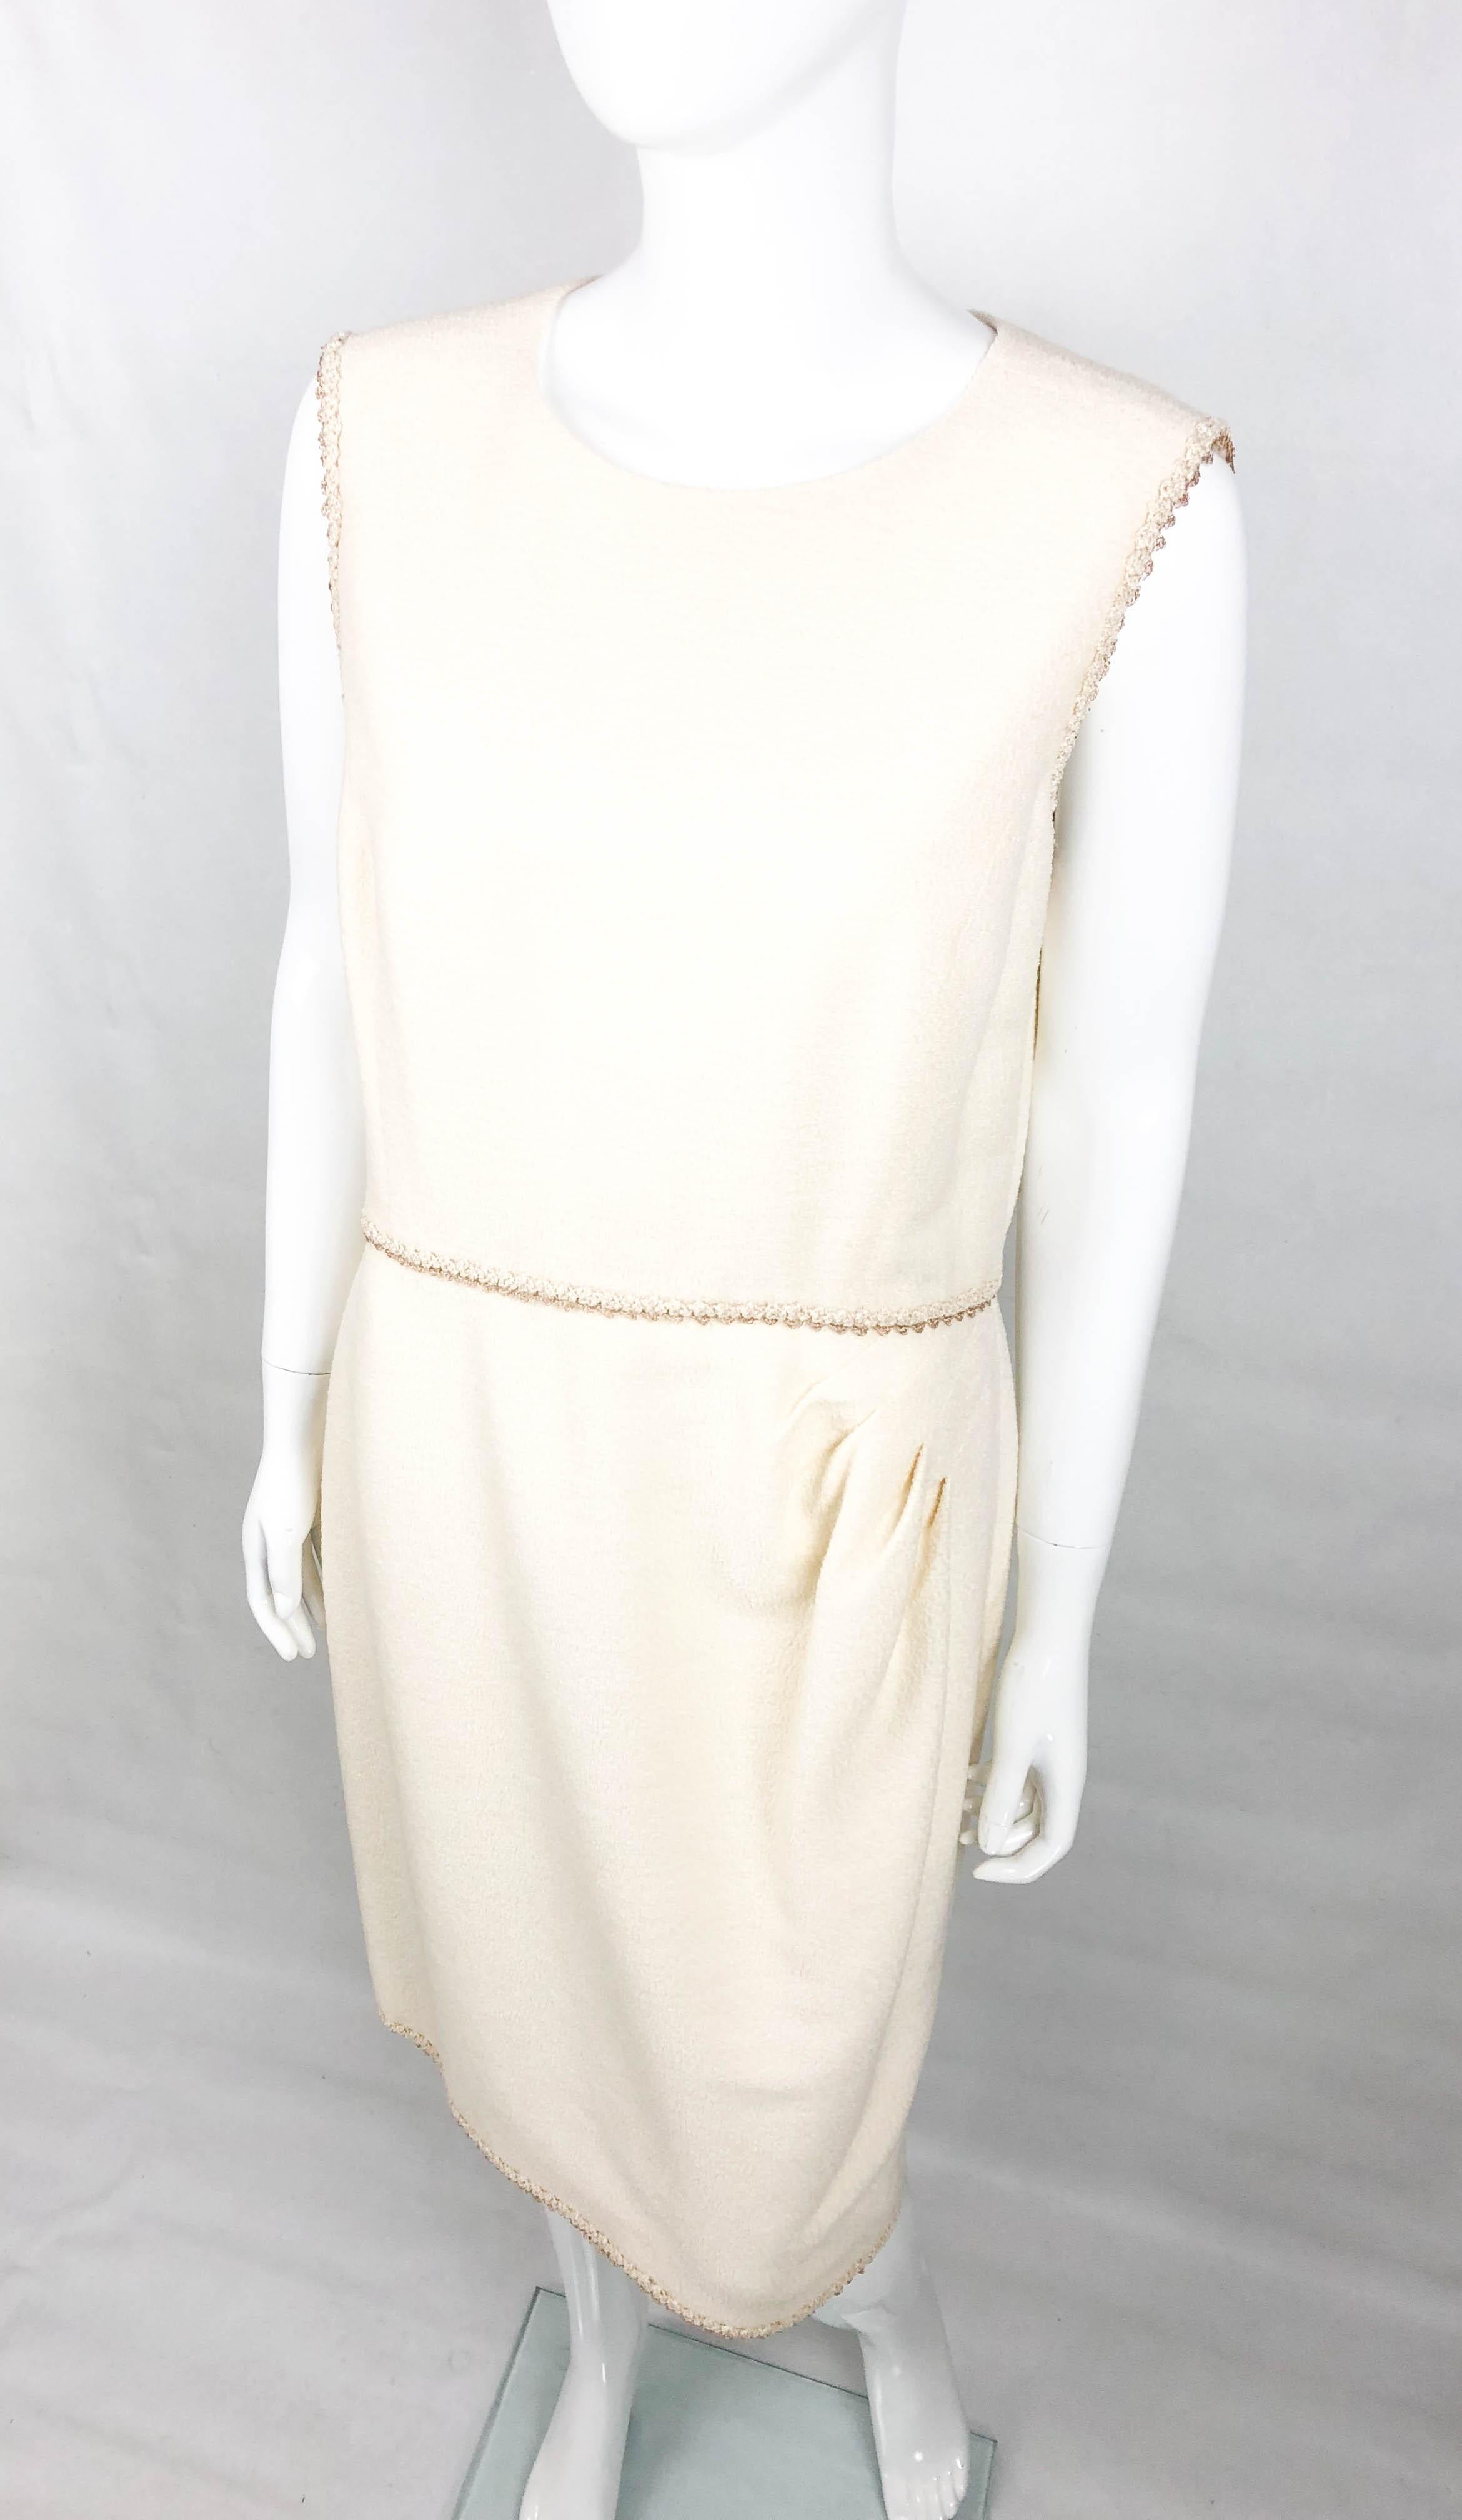 2010 Unworn Chanel Runway Look Cream Dress With Gold Thread Trim For Sale 2